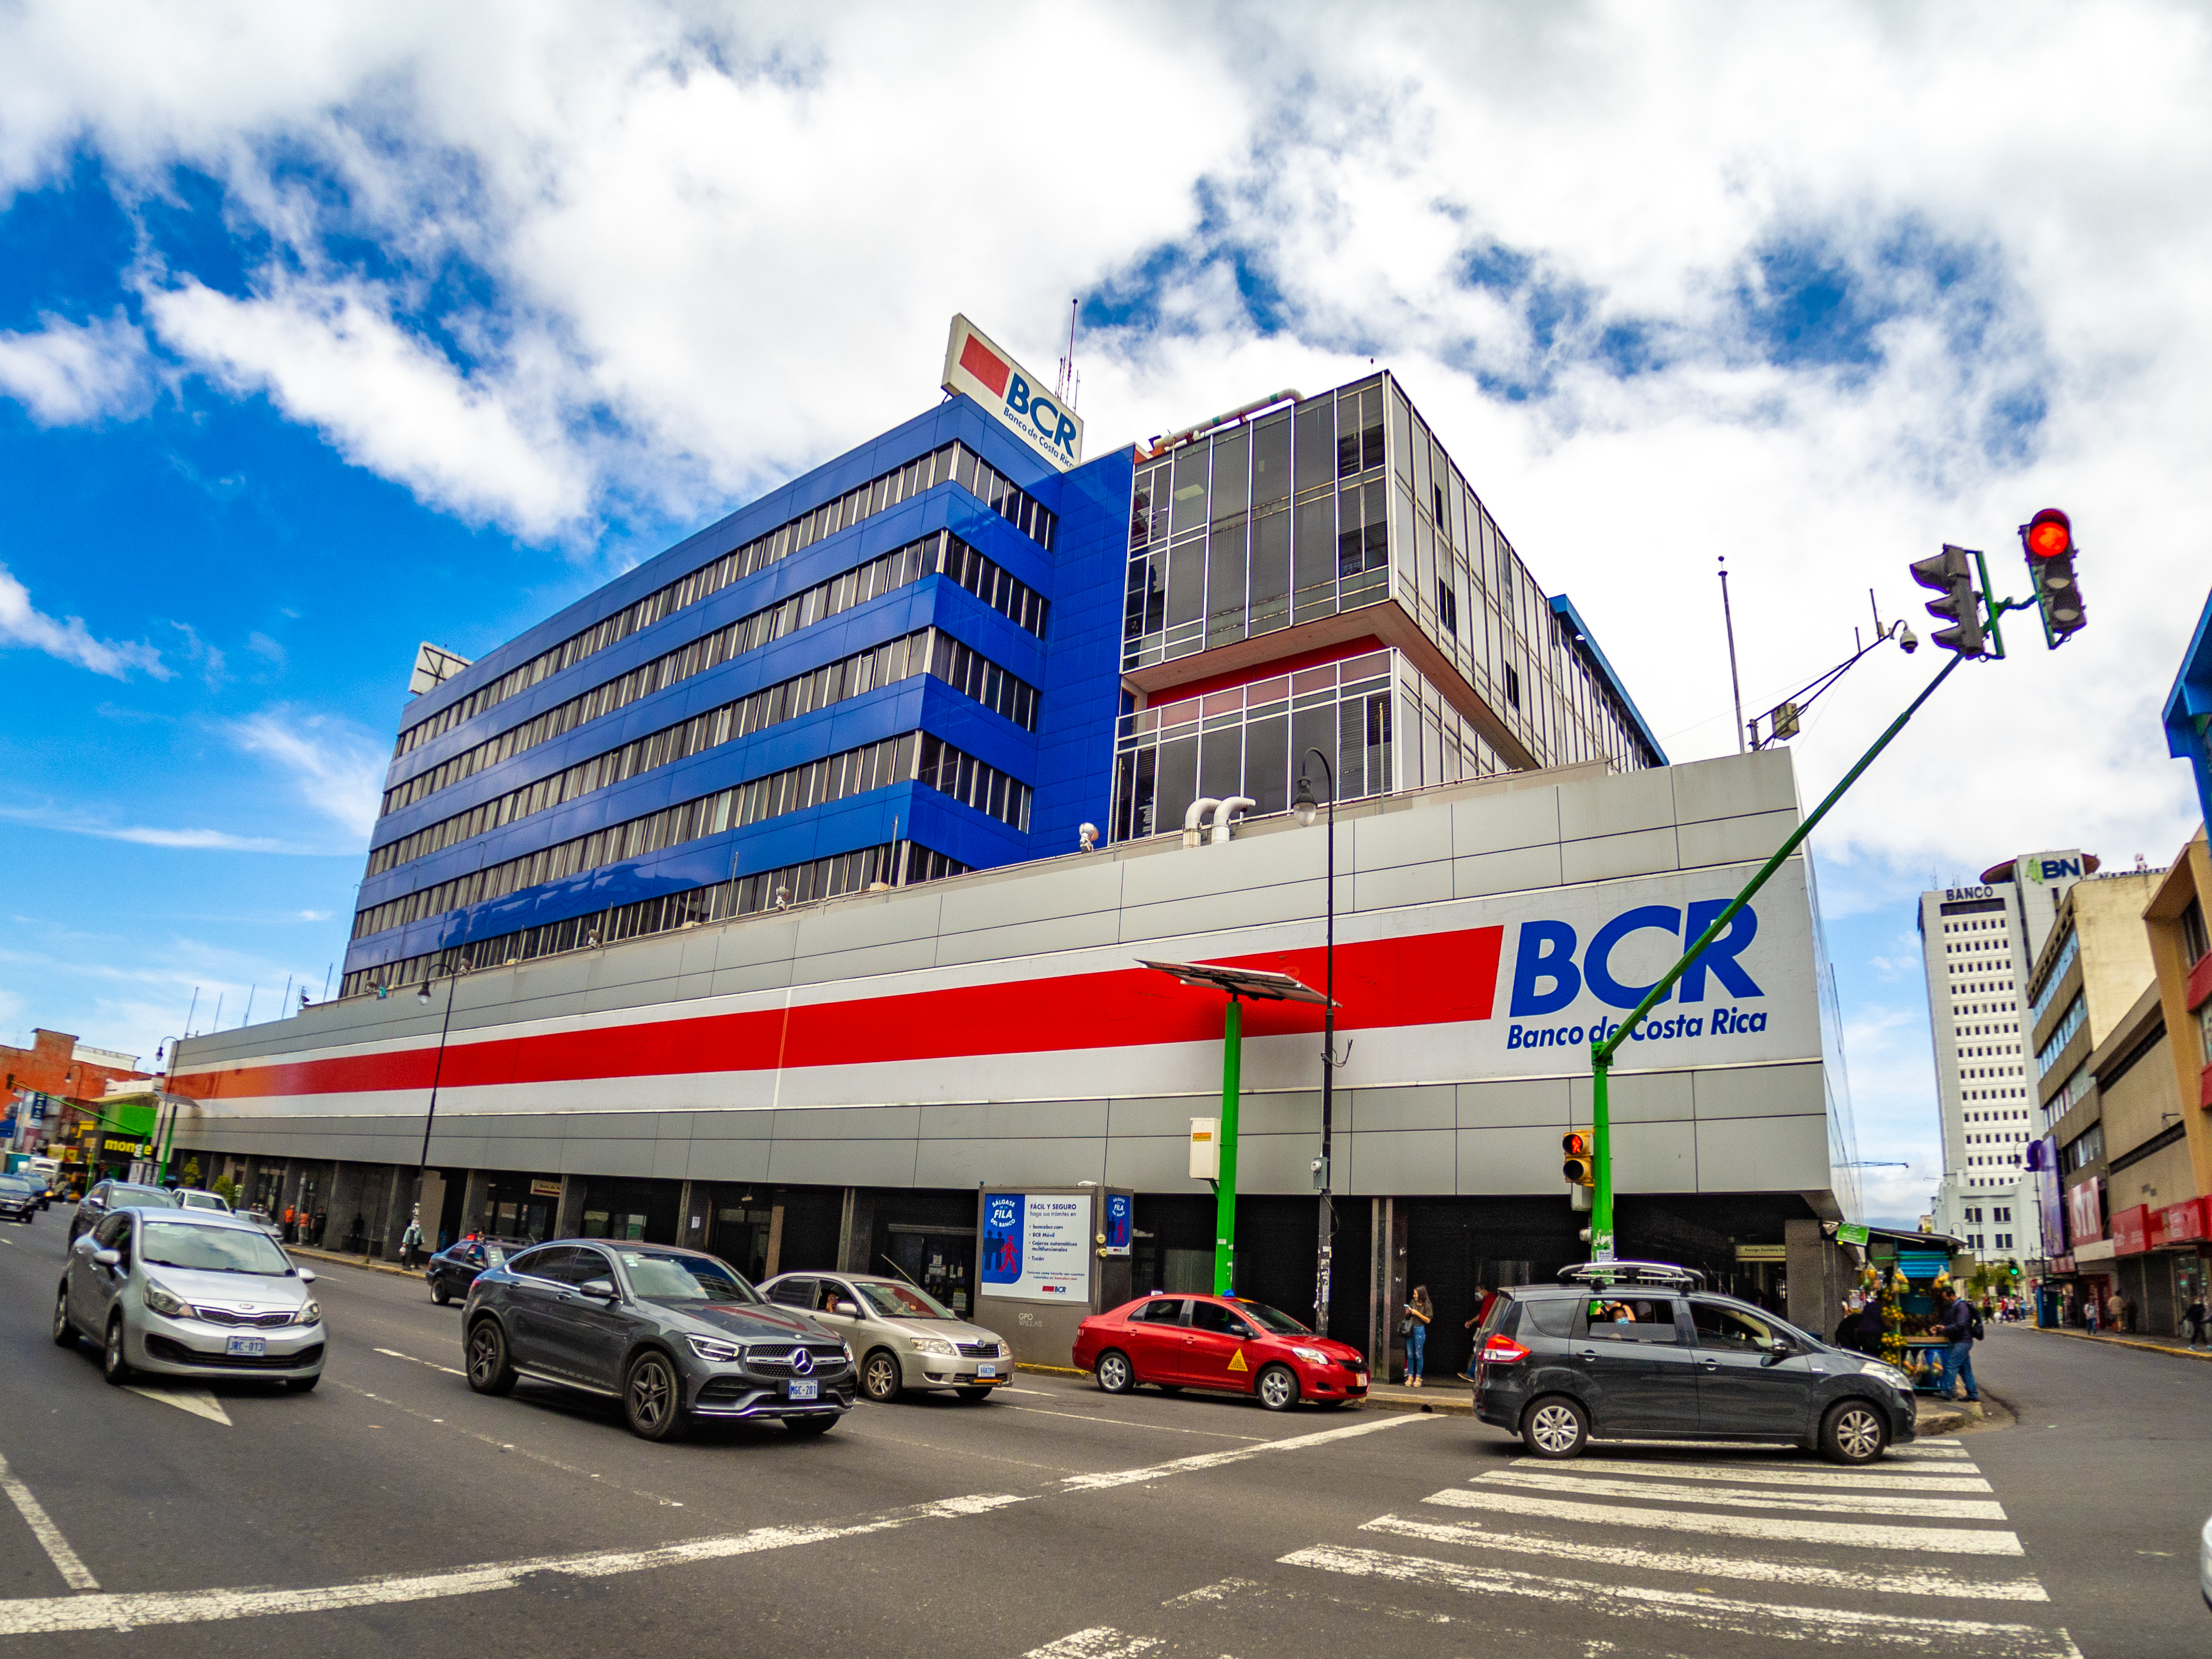 Subgerente del BCR presidía comité que aprobó polémica compra; luego fundó sociedades en Panamá con gerentes involucrados